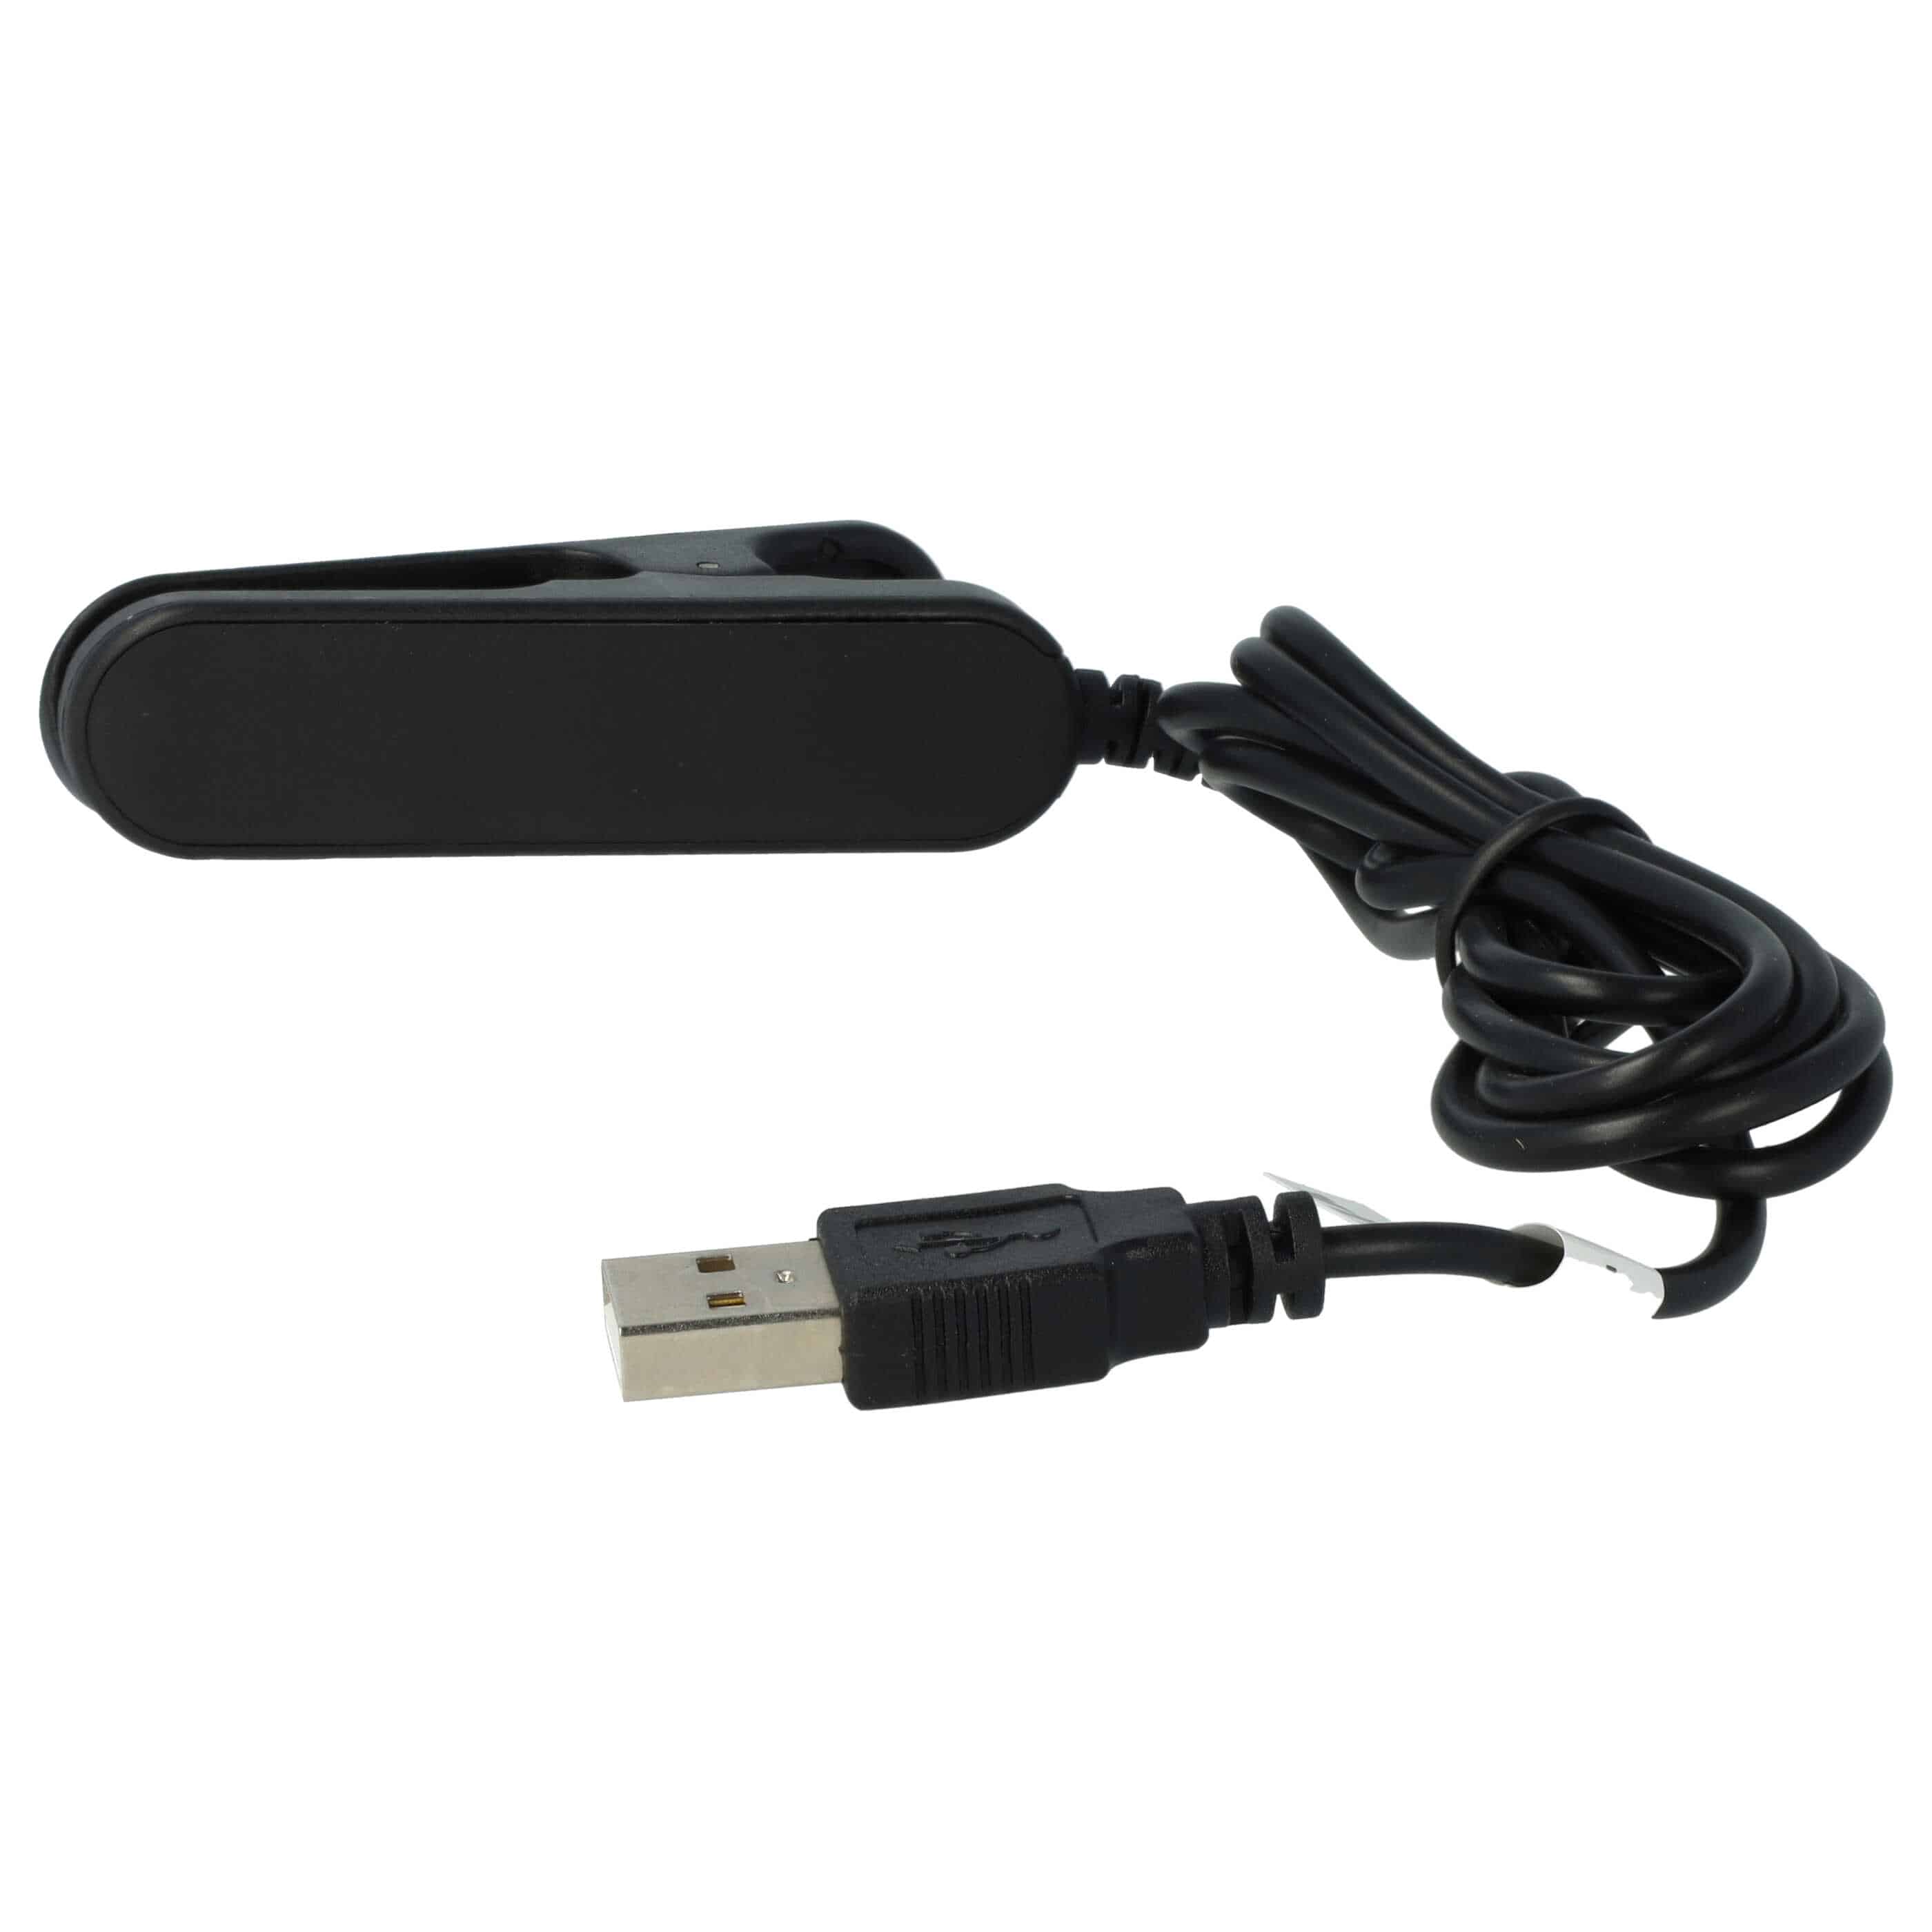 Cable de carga USB para smartwatch Polar V800 - negro 100 cm